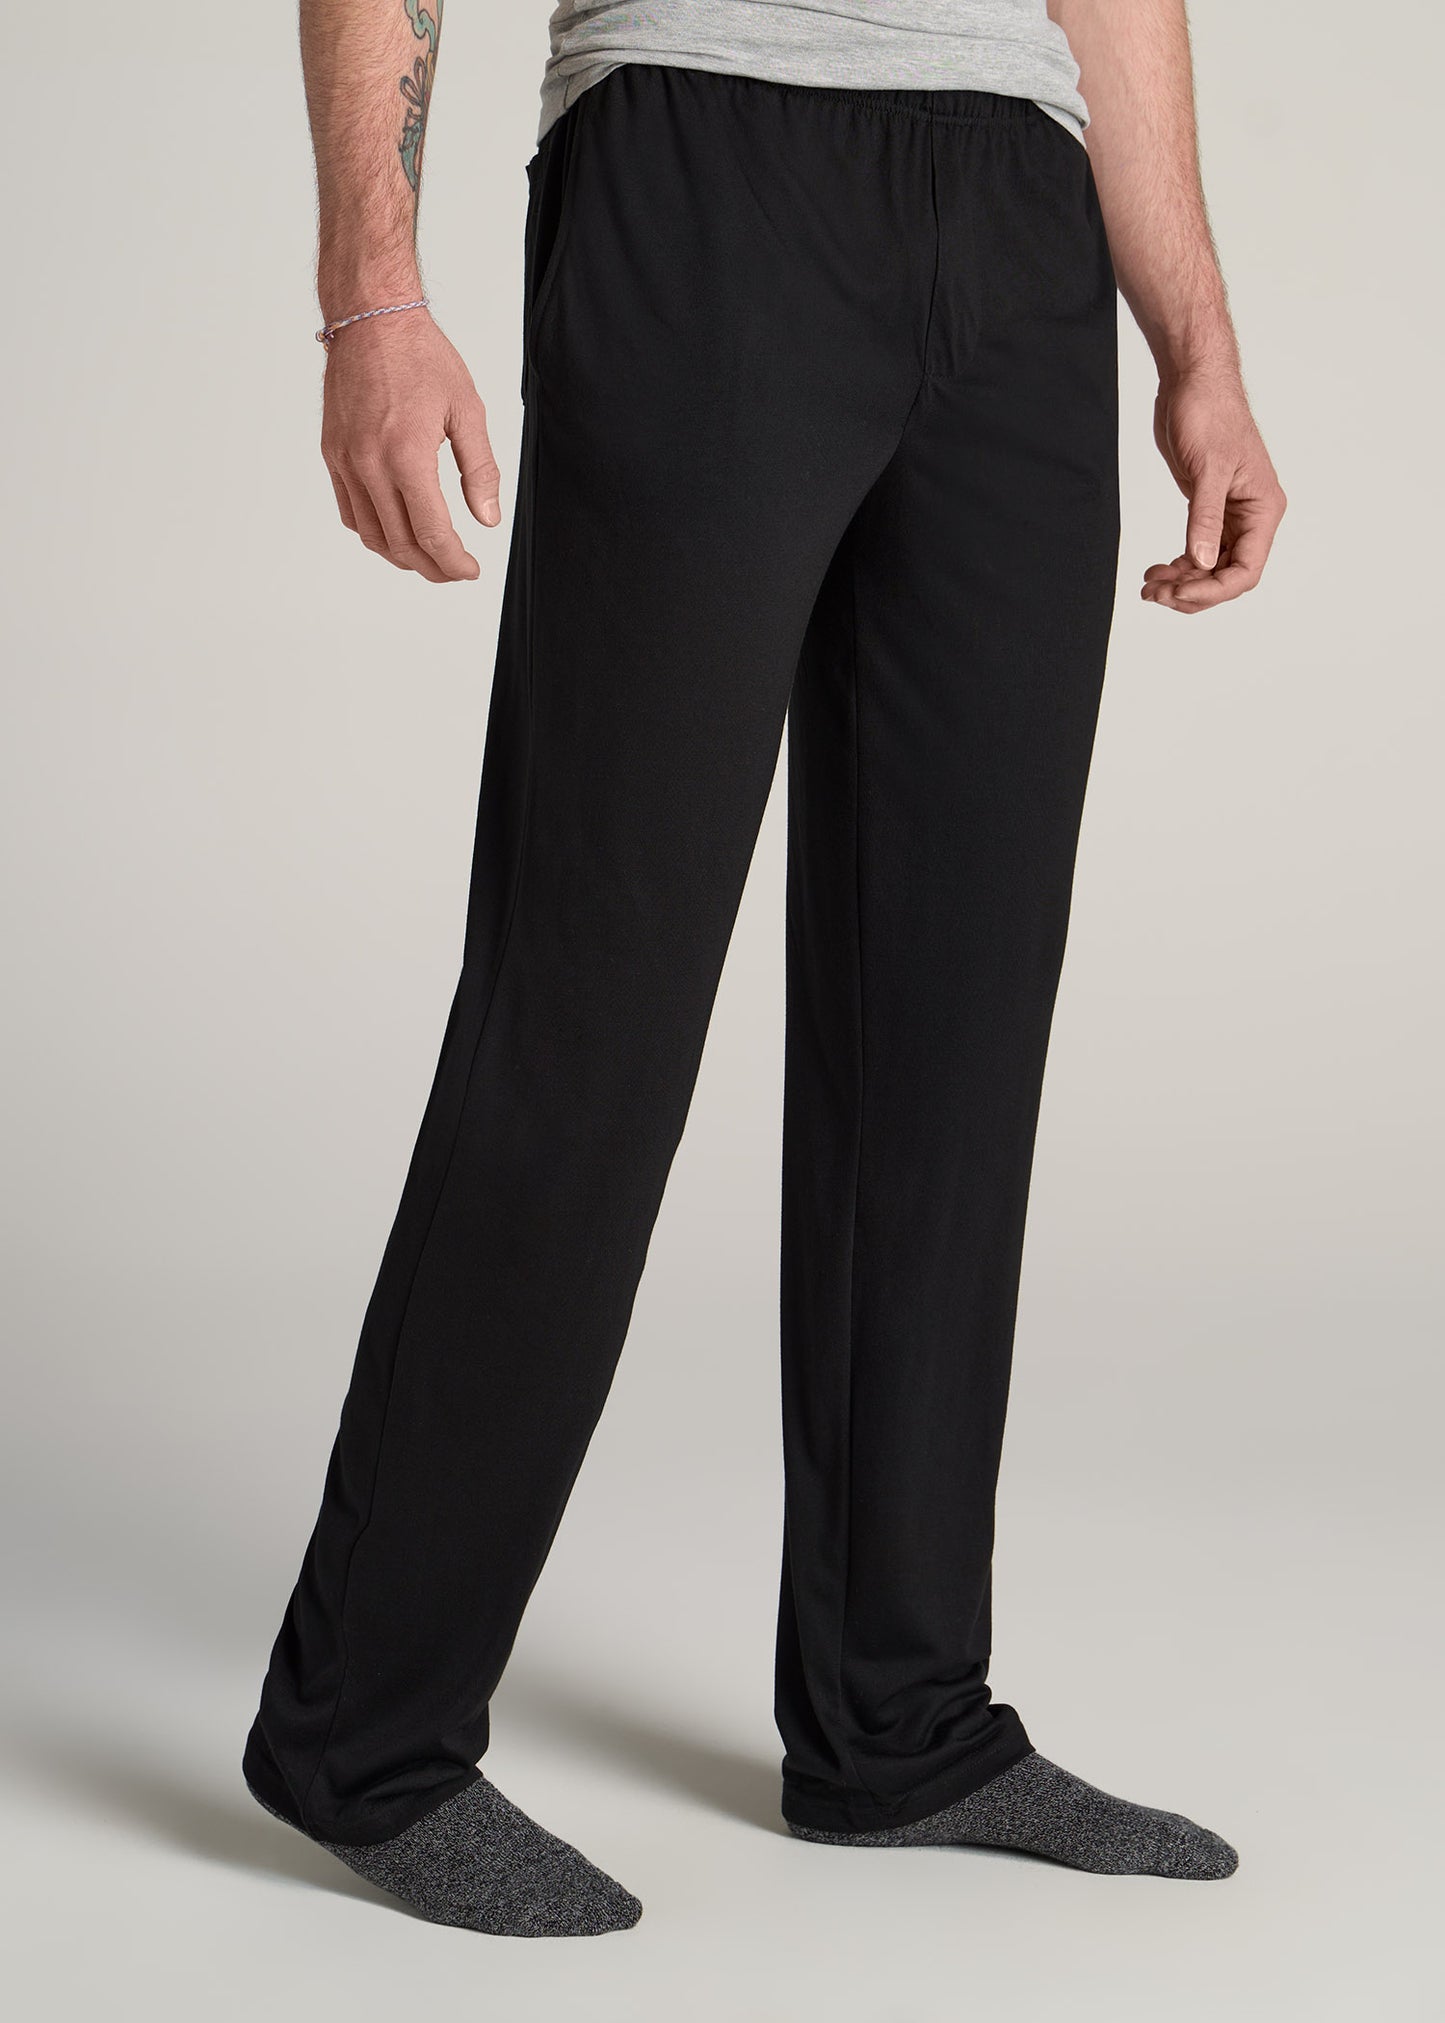 Modal Jersey Lounge Pant  Pants, Comfortable pant, Lounge pants